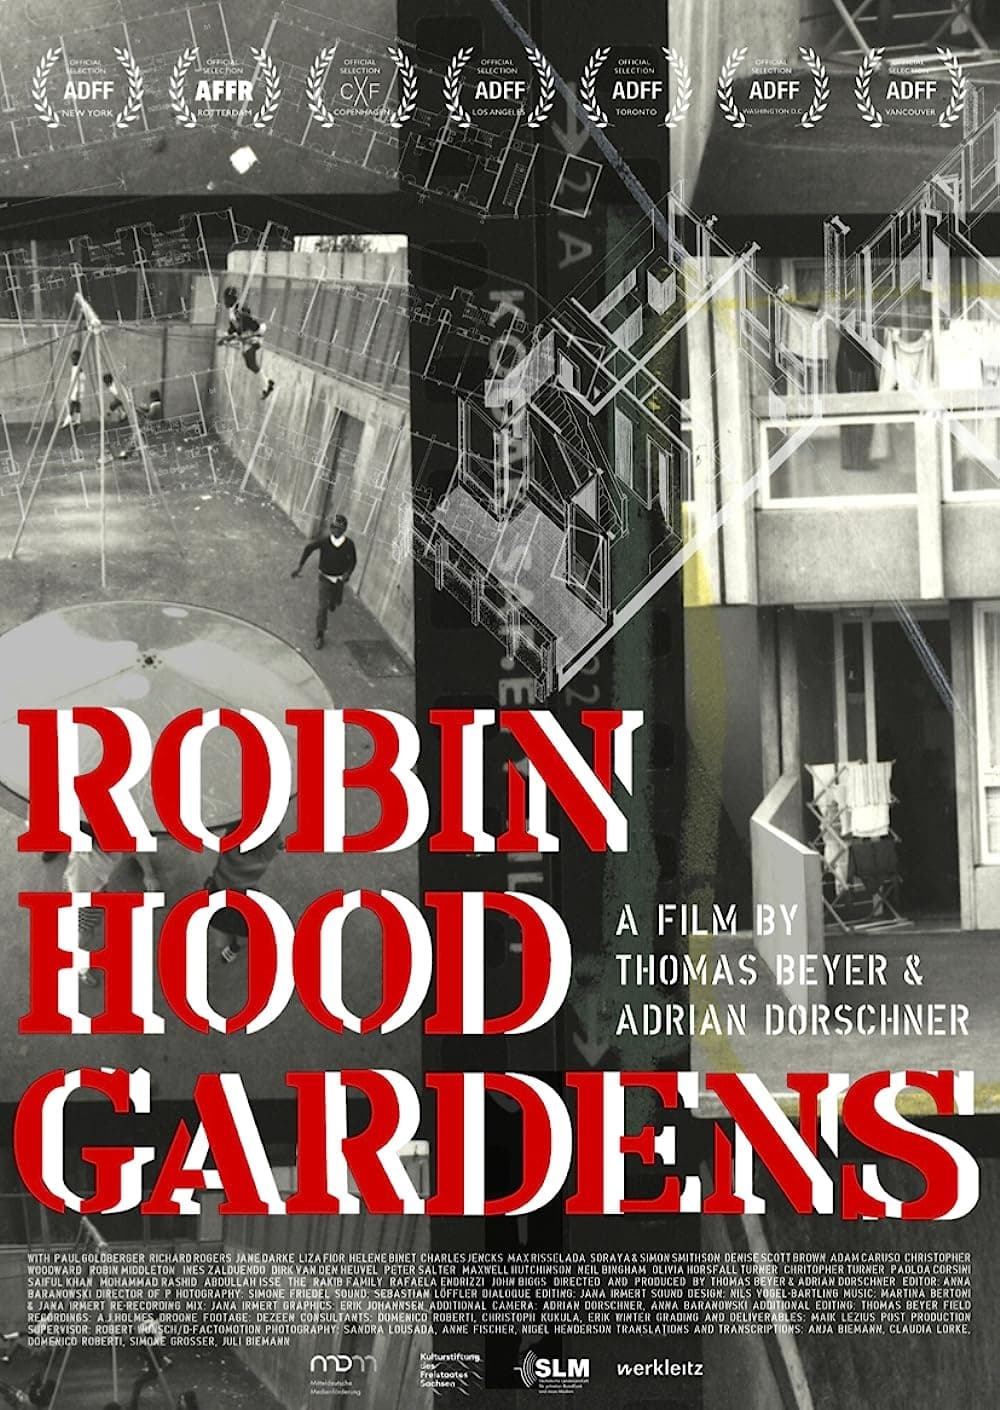 Robin Hood Gardens